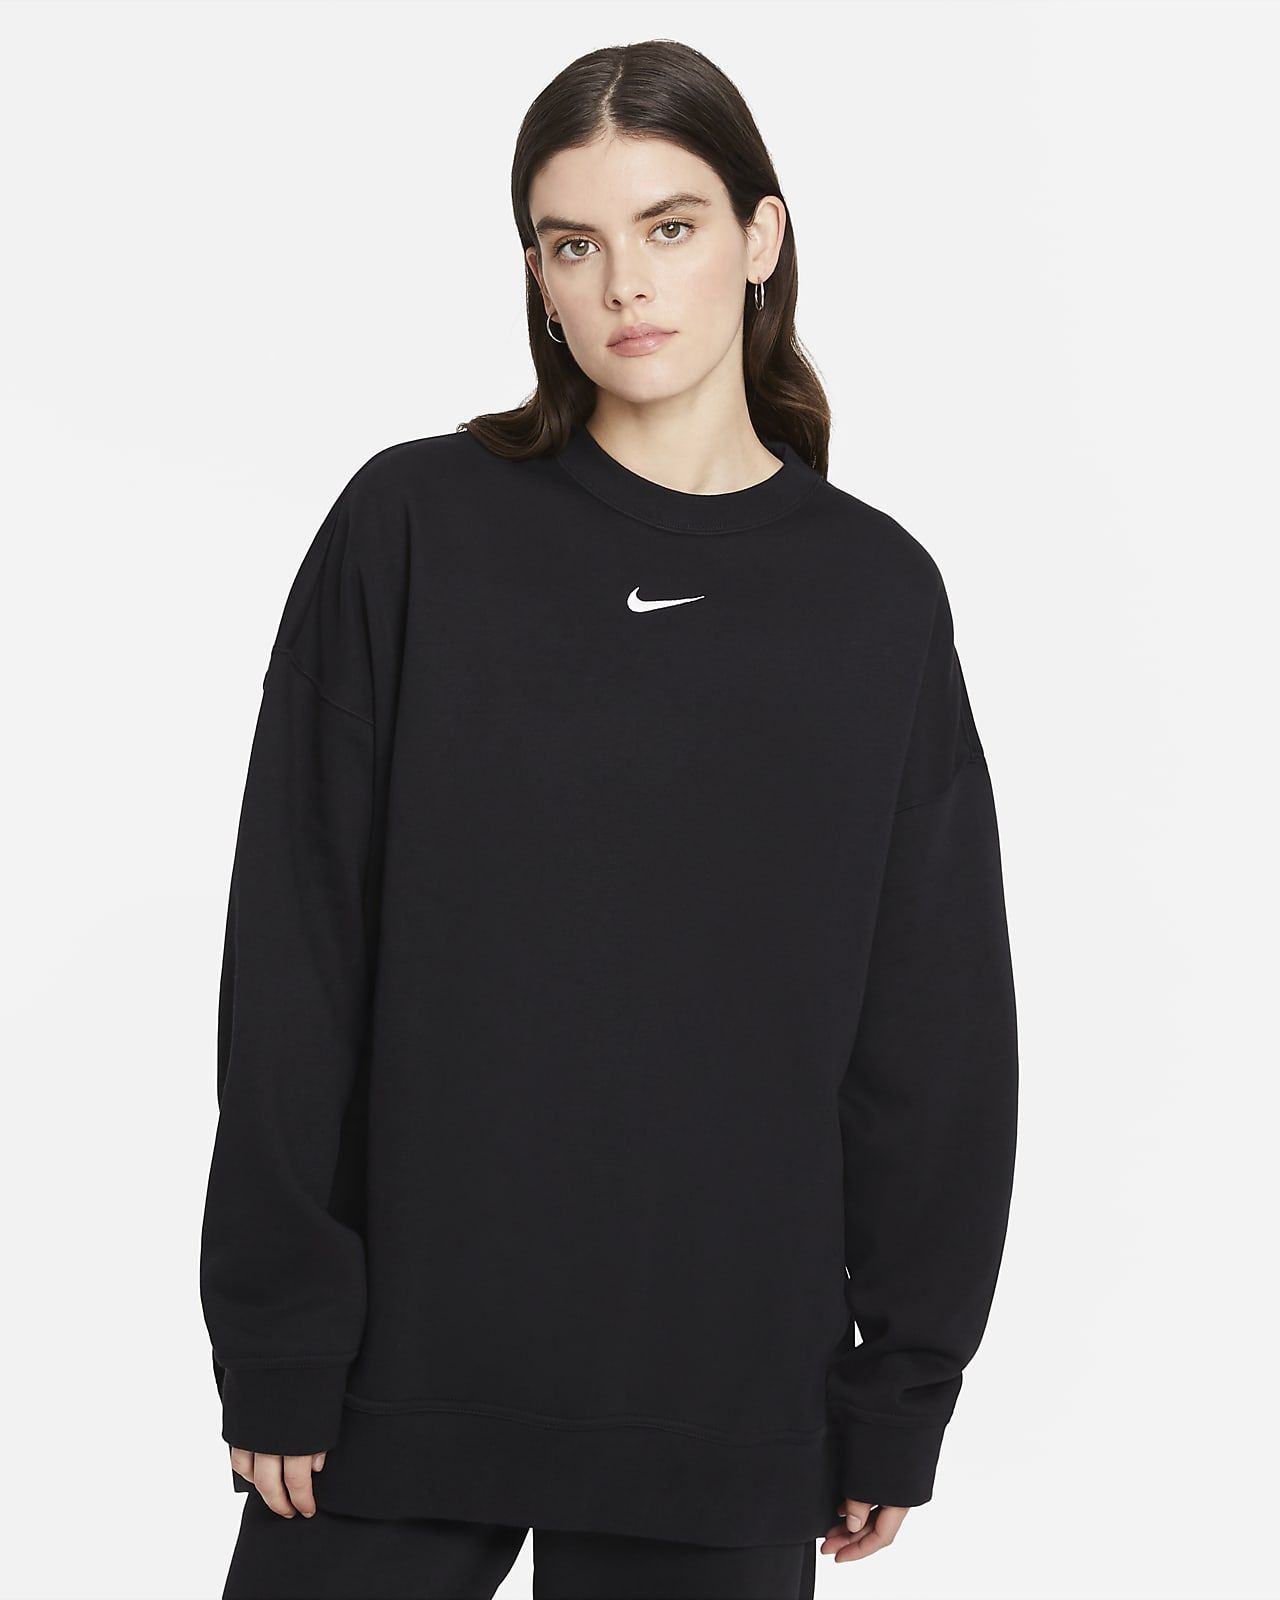 Nike Sportswear Collection Essentials | Nike (US)